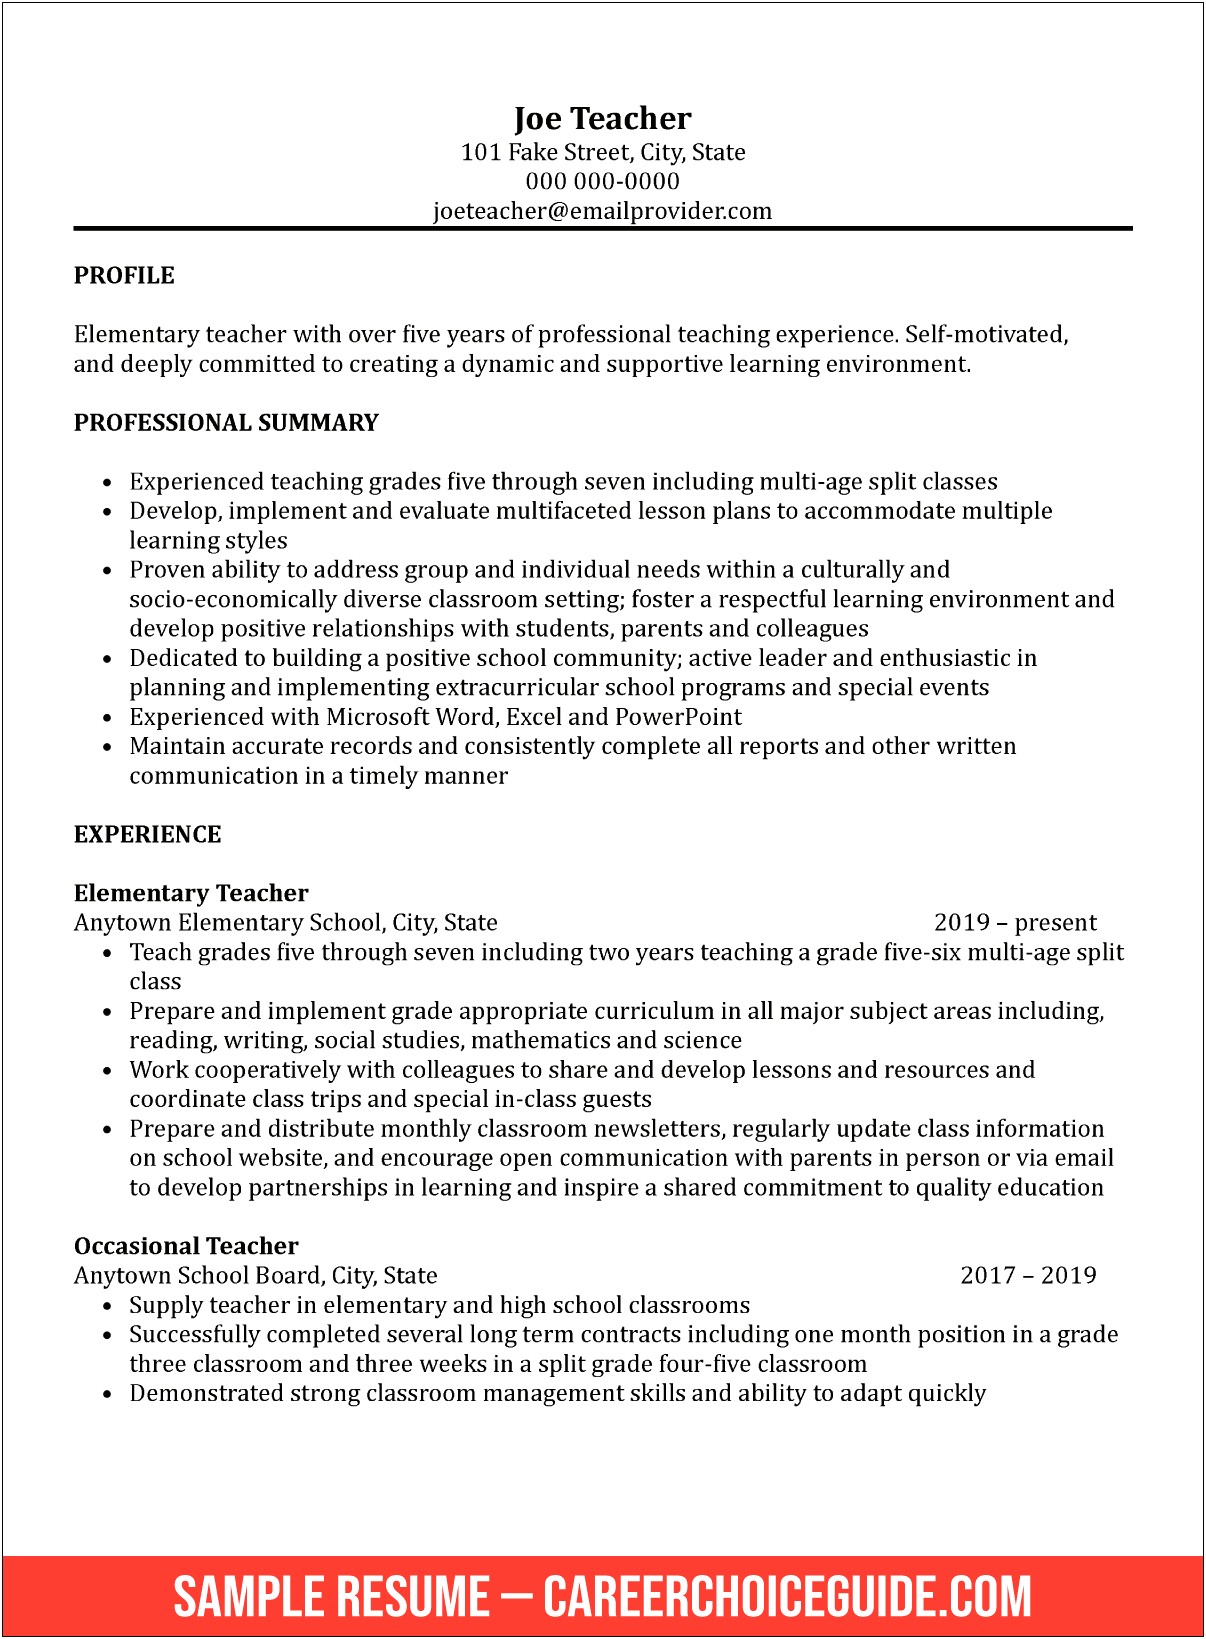 Professional Summary Resume Sample For Teachers